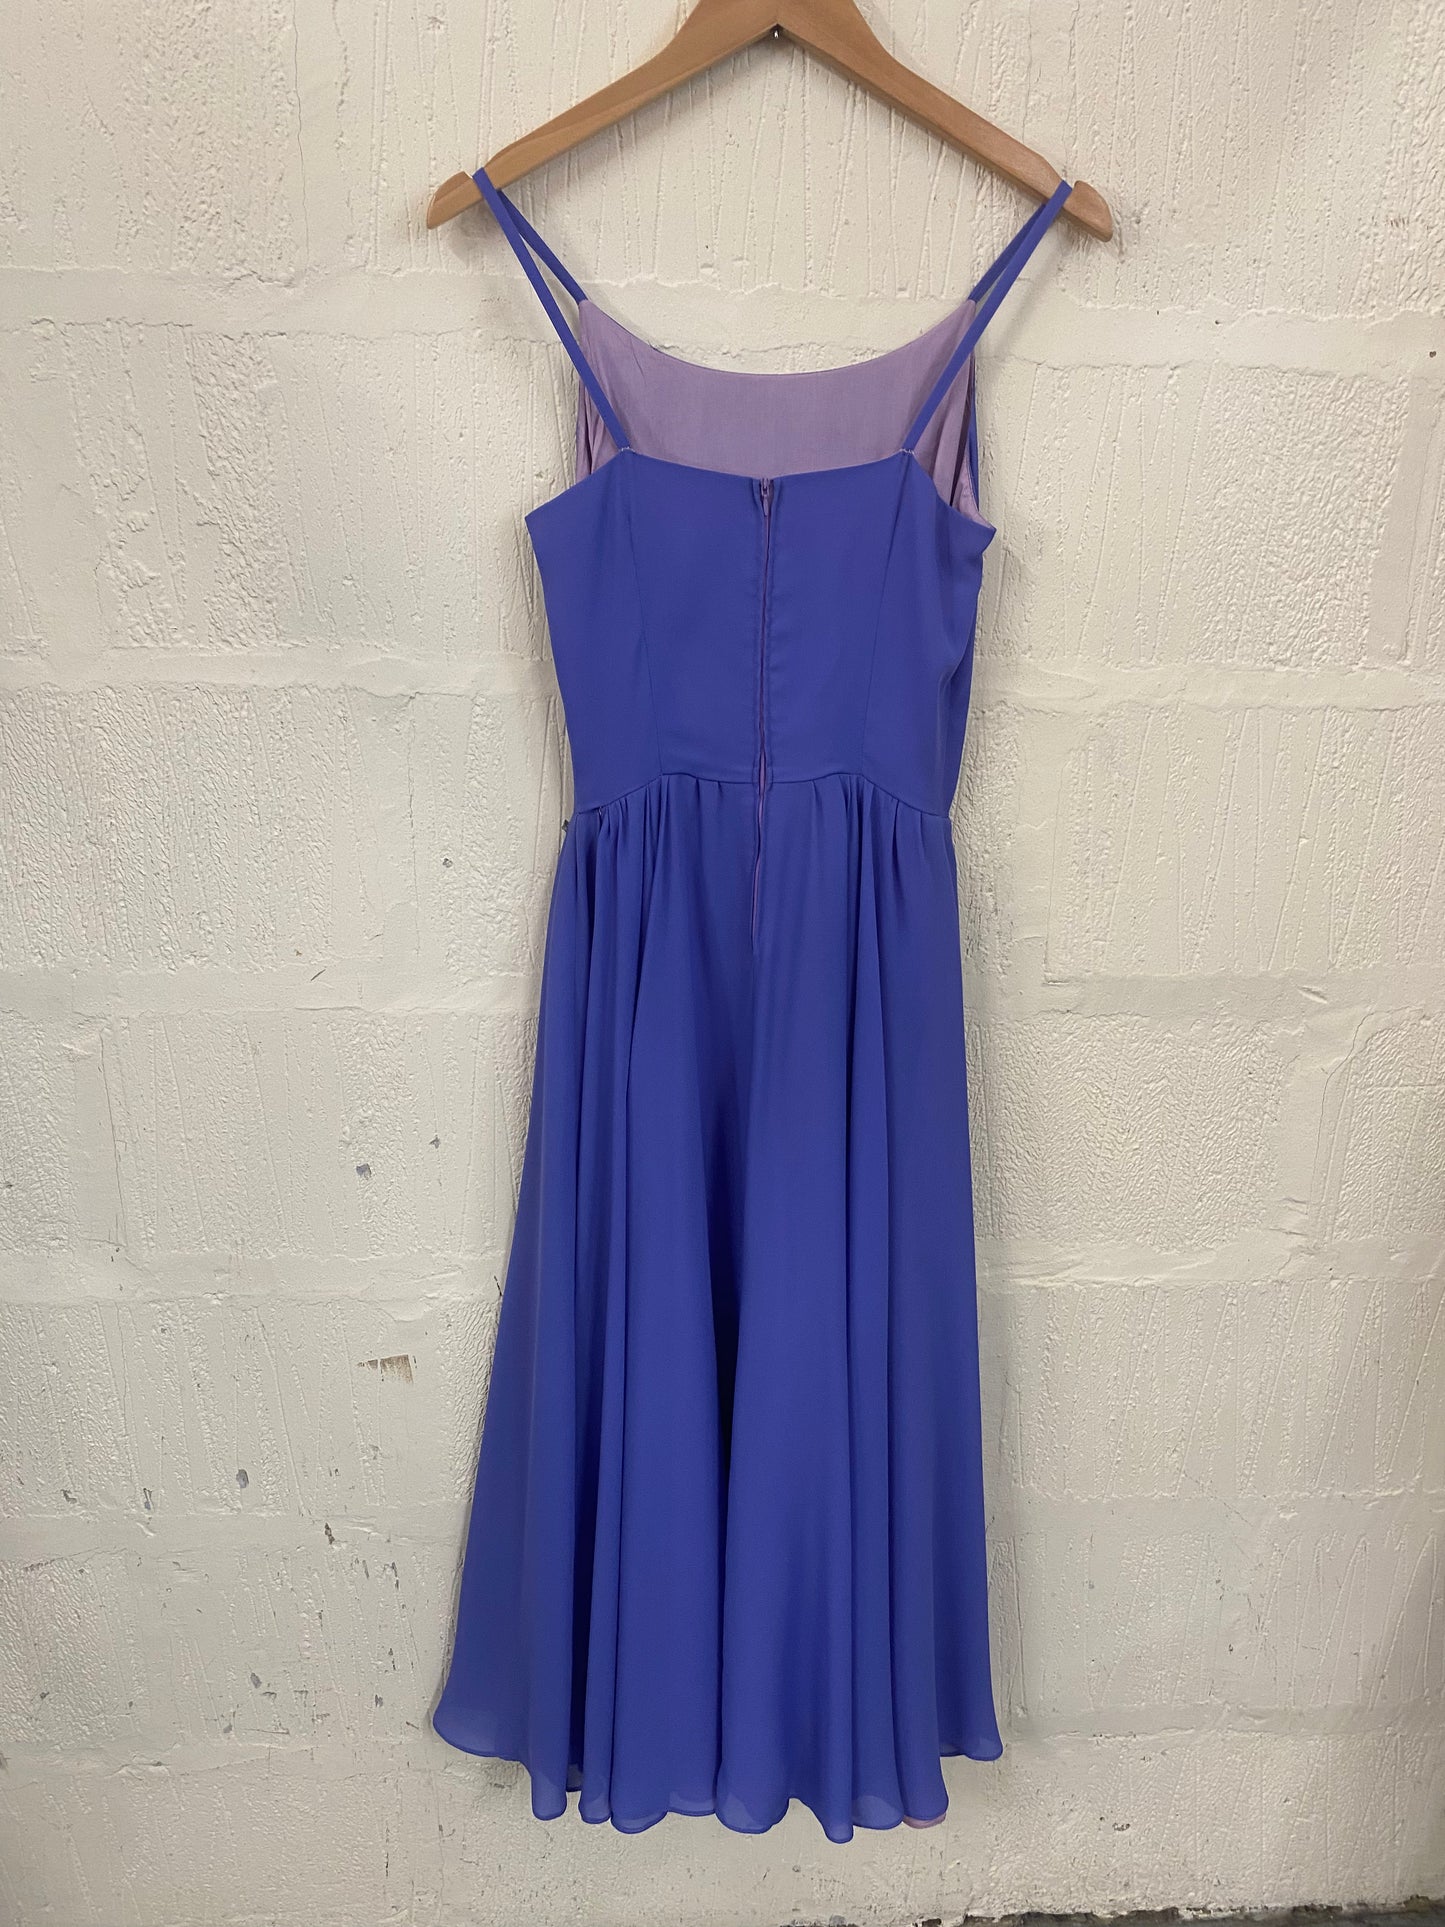 Vintage Purple Ballerina Style Dress Size 6